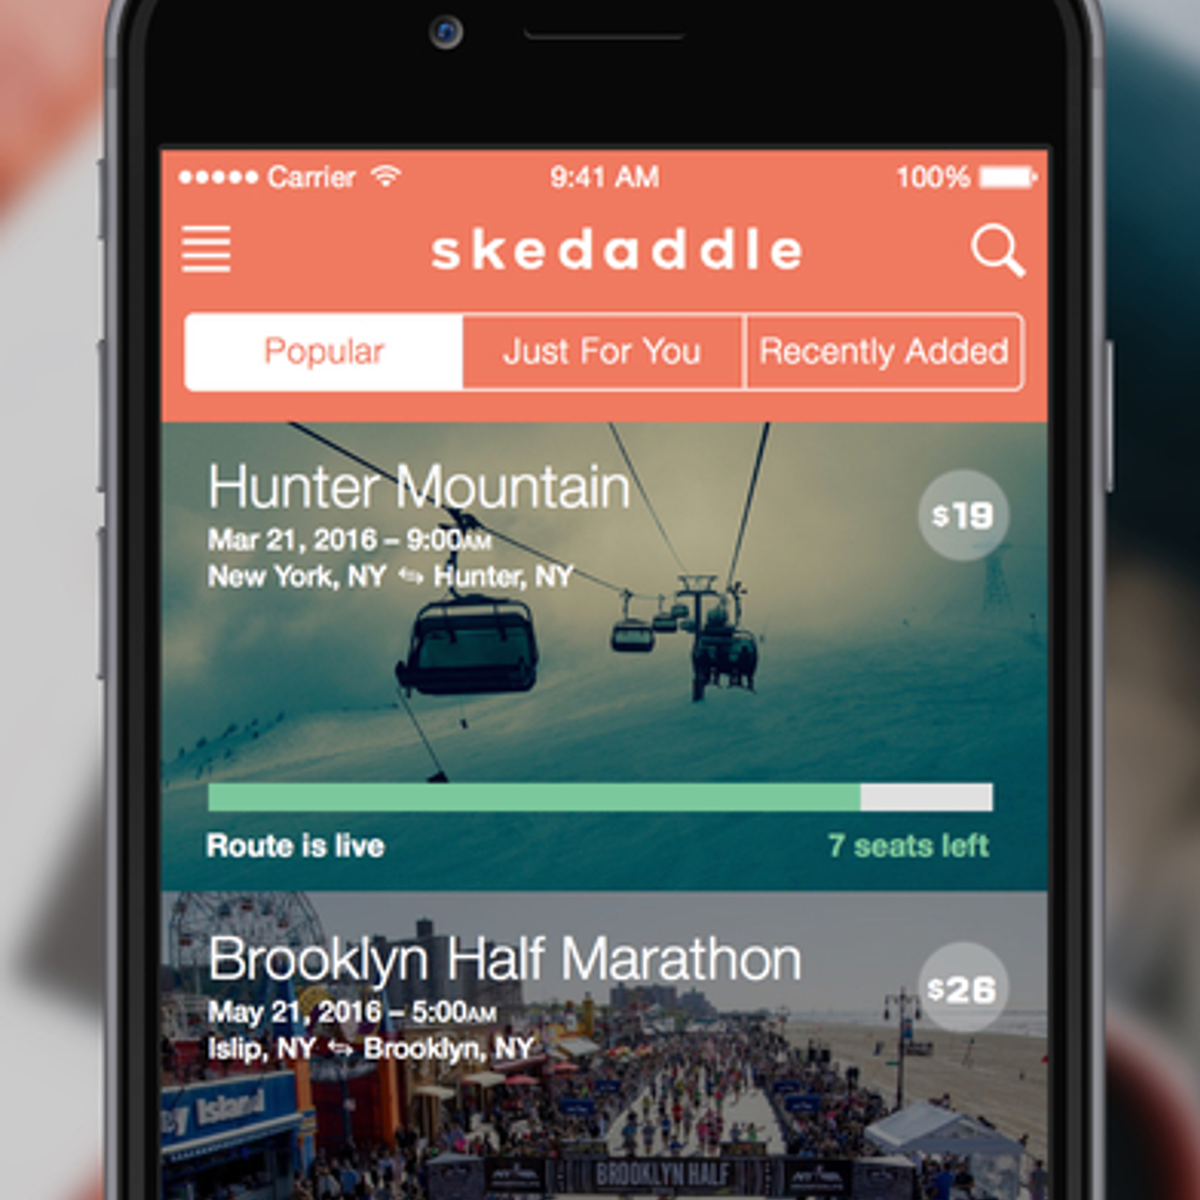 skedaddle app